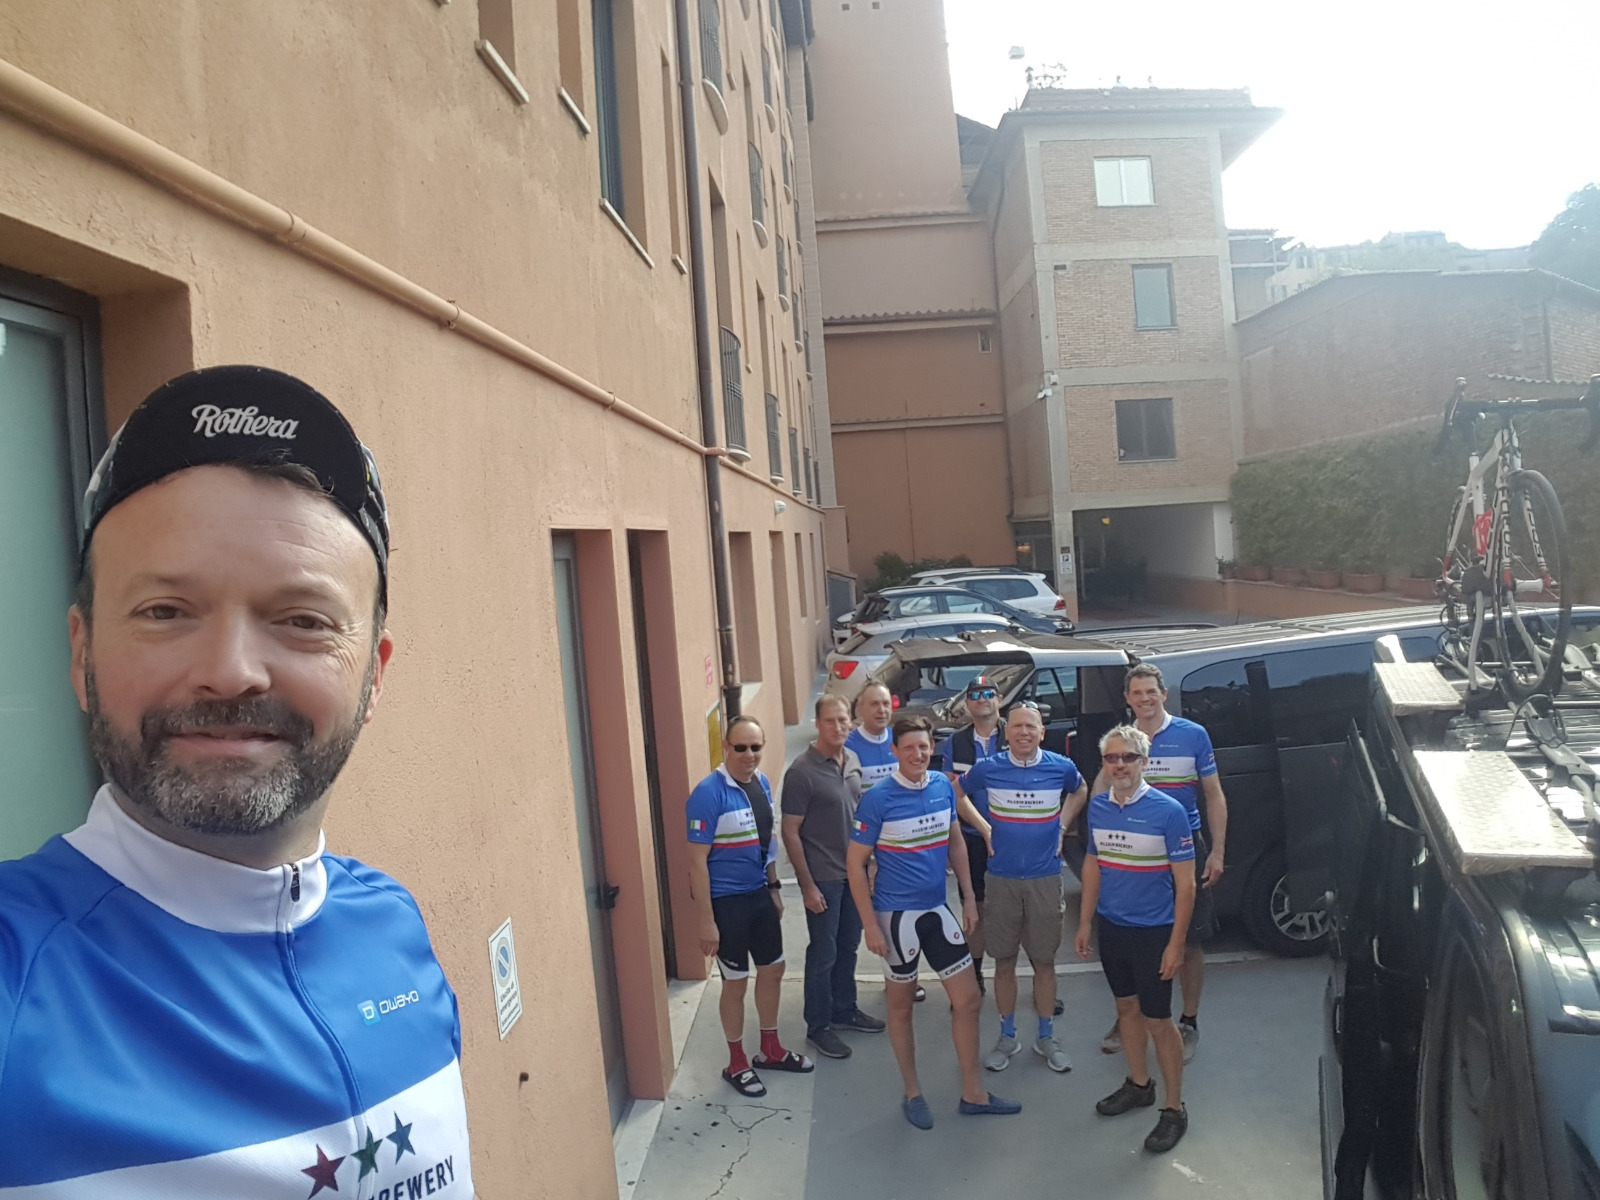 Cycle Tour of Tuscany - May 2019